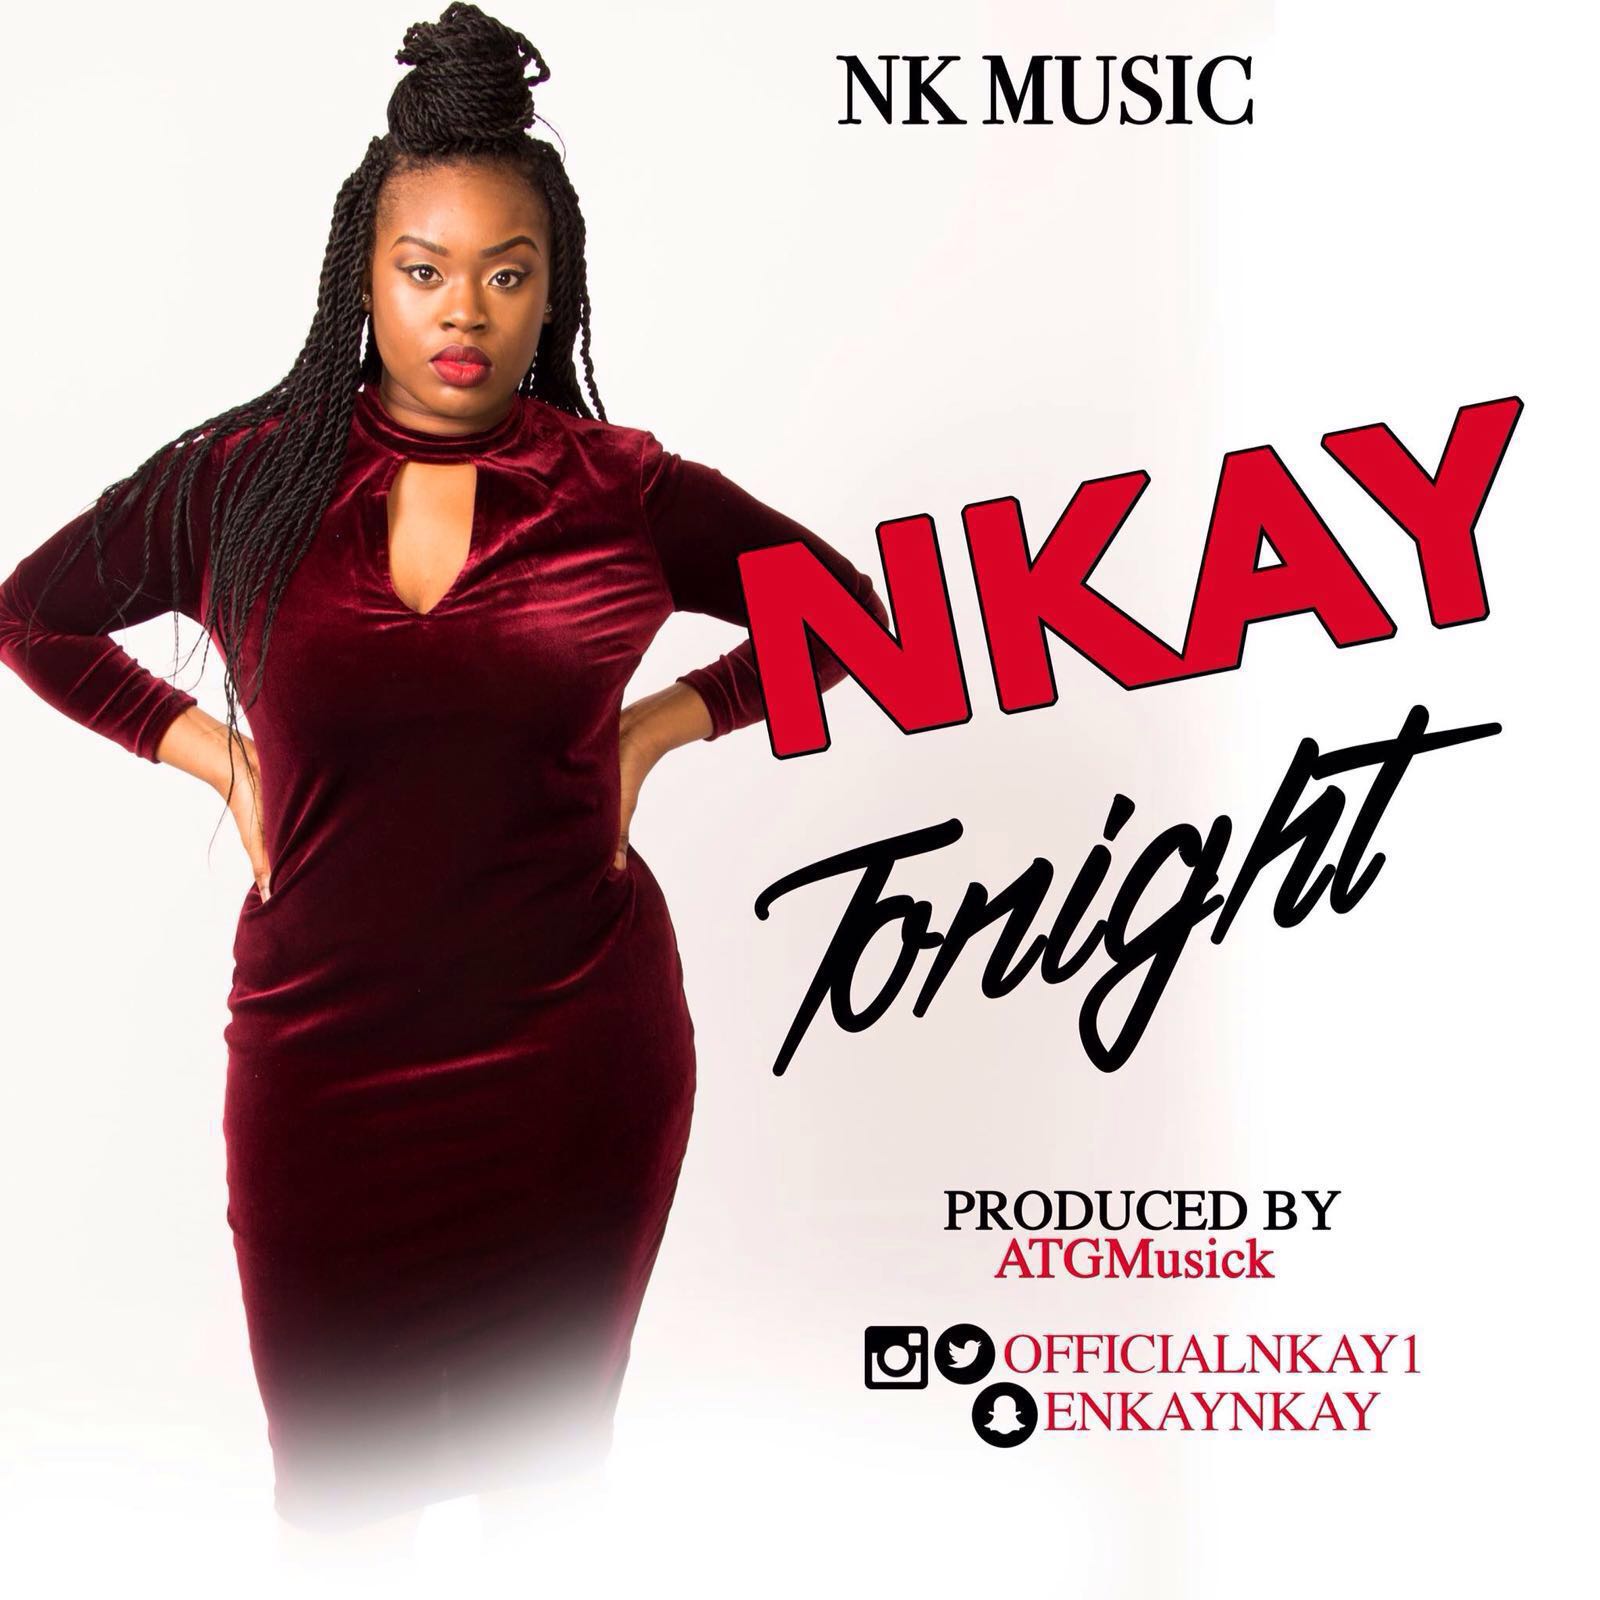 Nkay - Tonight